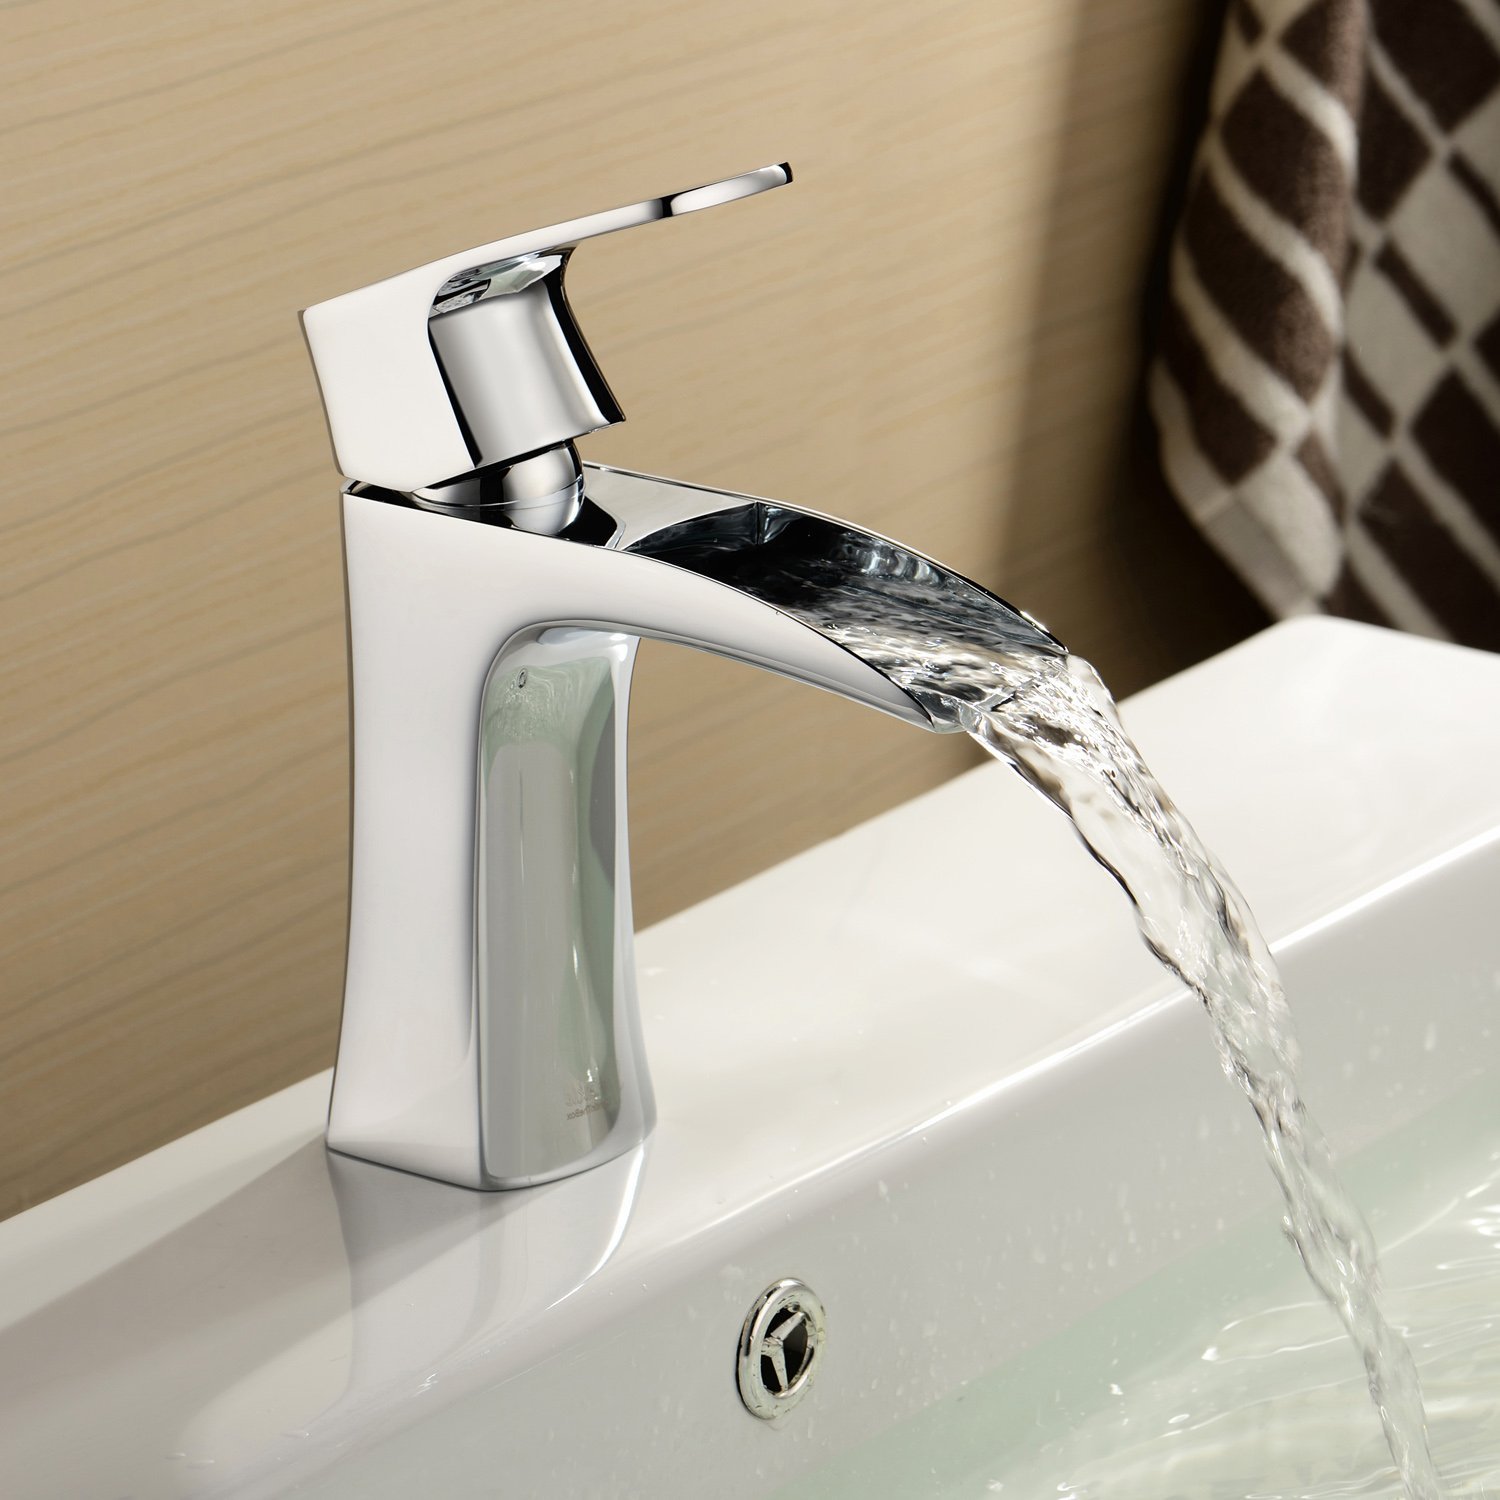 Wovier Bathroom Sink Faucet with Supply Hose,Single Handle Single Hole Lavatory Faucet W8232 -1